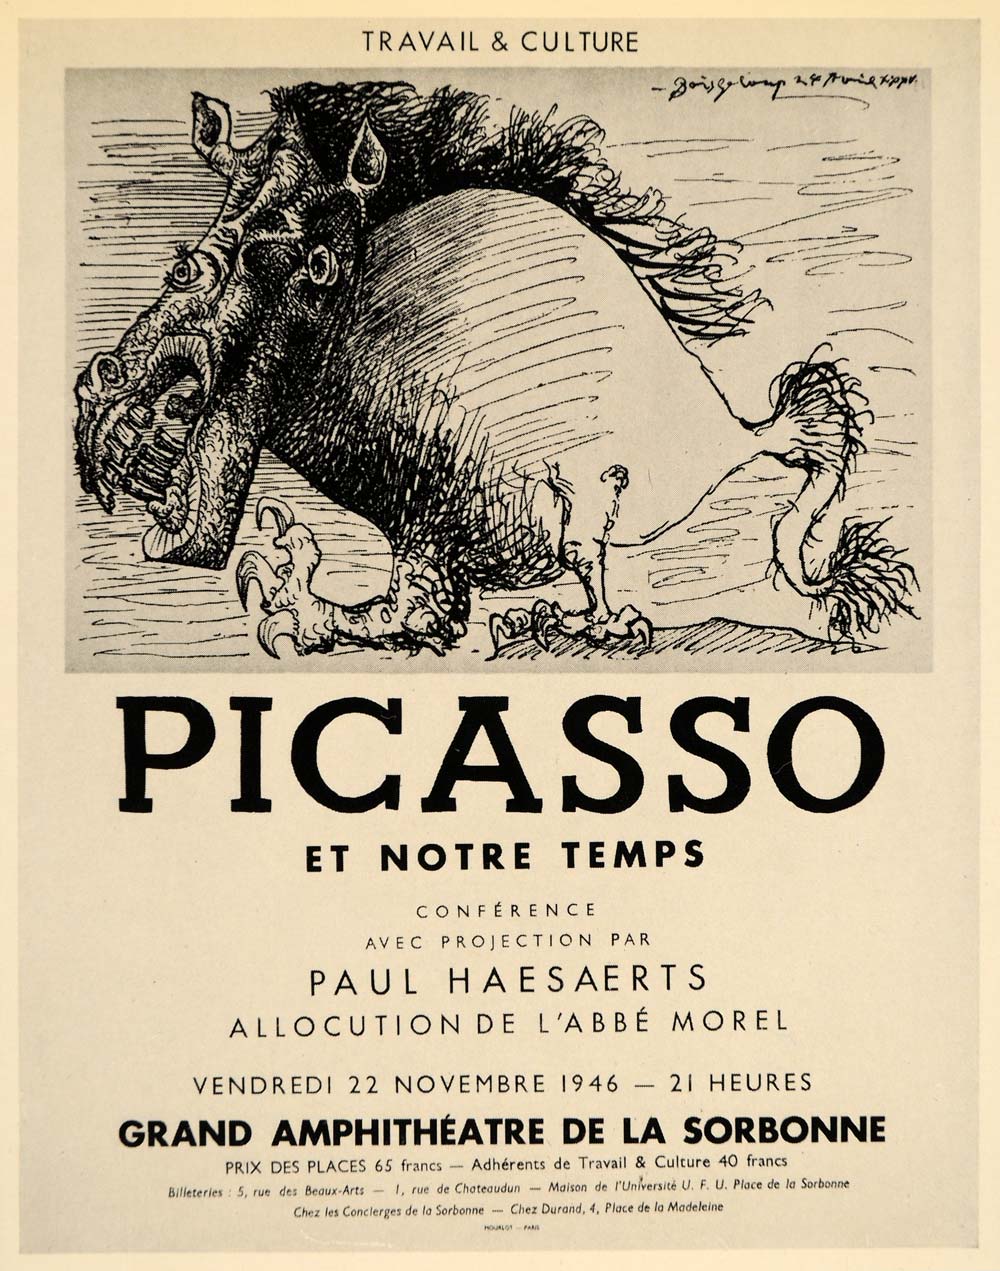 1971 Print Picasso Lecture Paul Haesaerts Poster 1946 - ORIGINAL PIC3